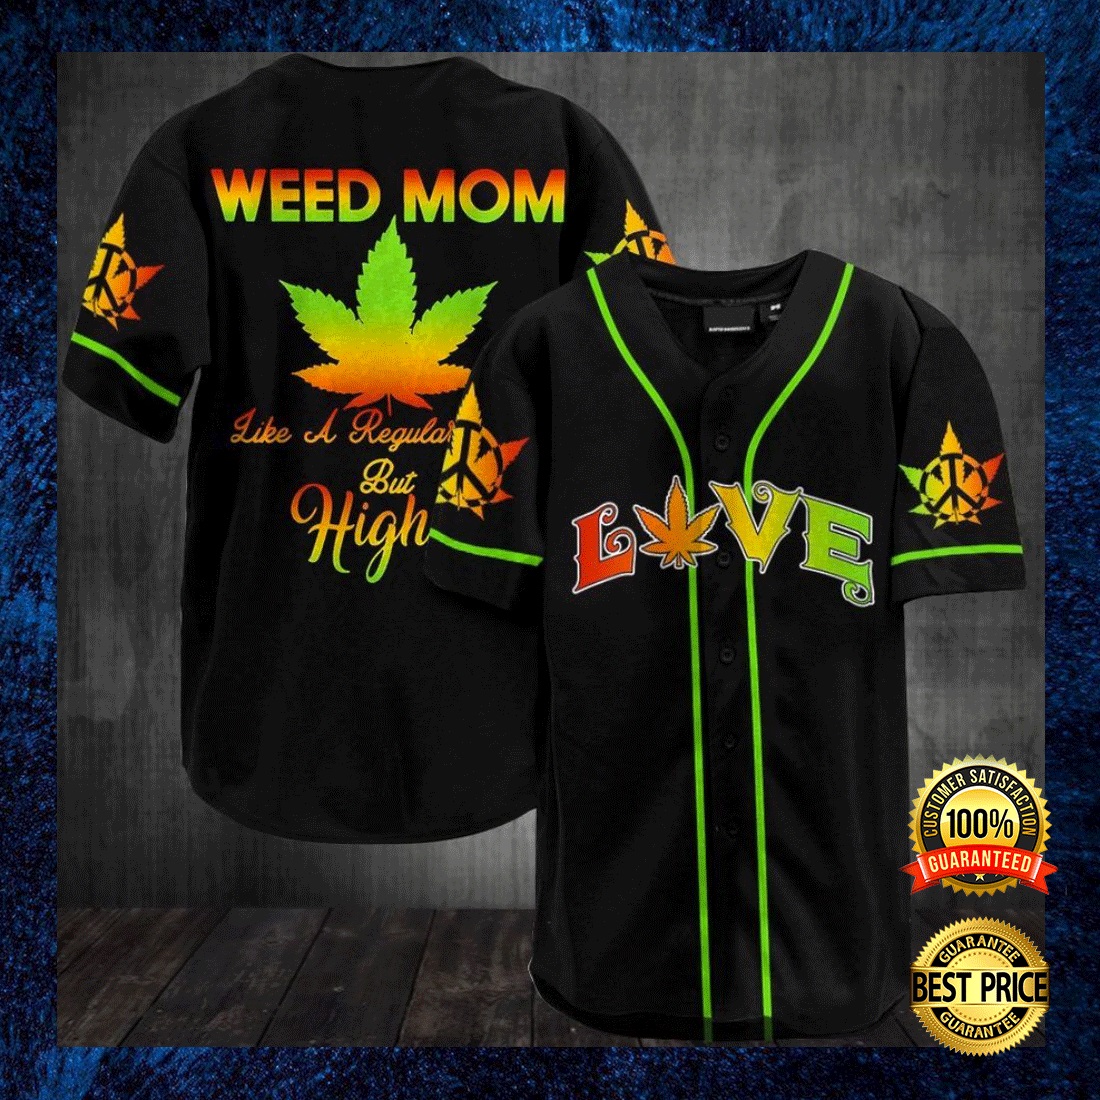 Weed mom like a regular mom but higher baseball jersey